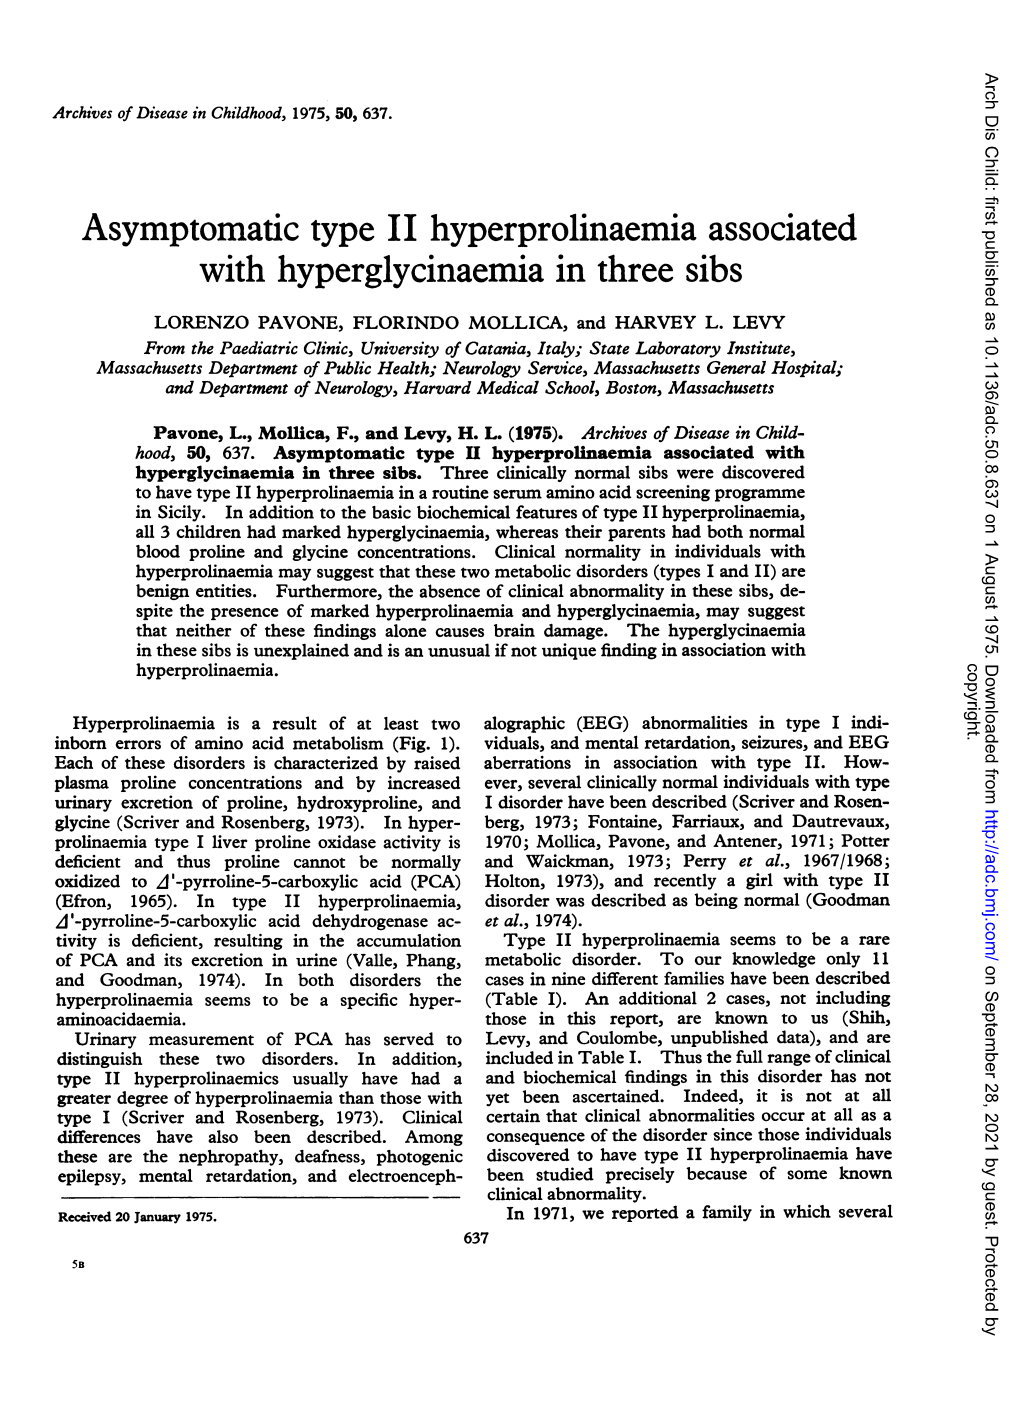 Asymptomatic Type II Hyperprolinaemia Associated with Hyperglycinaemia in Three Sibs